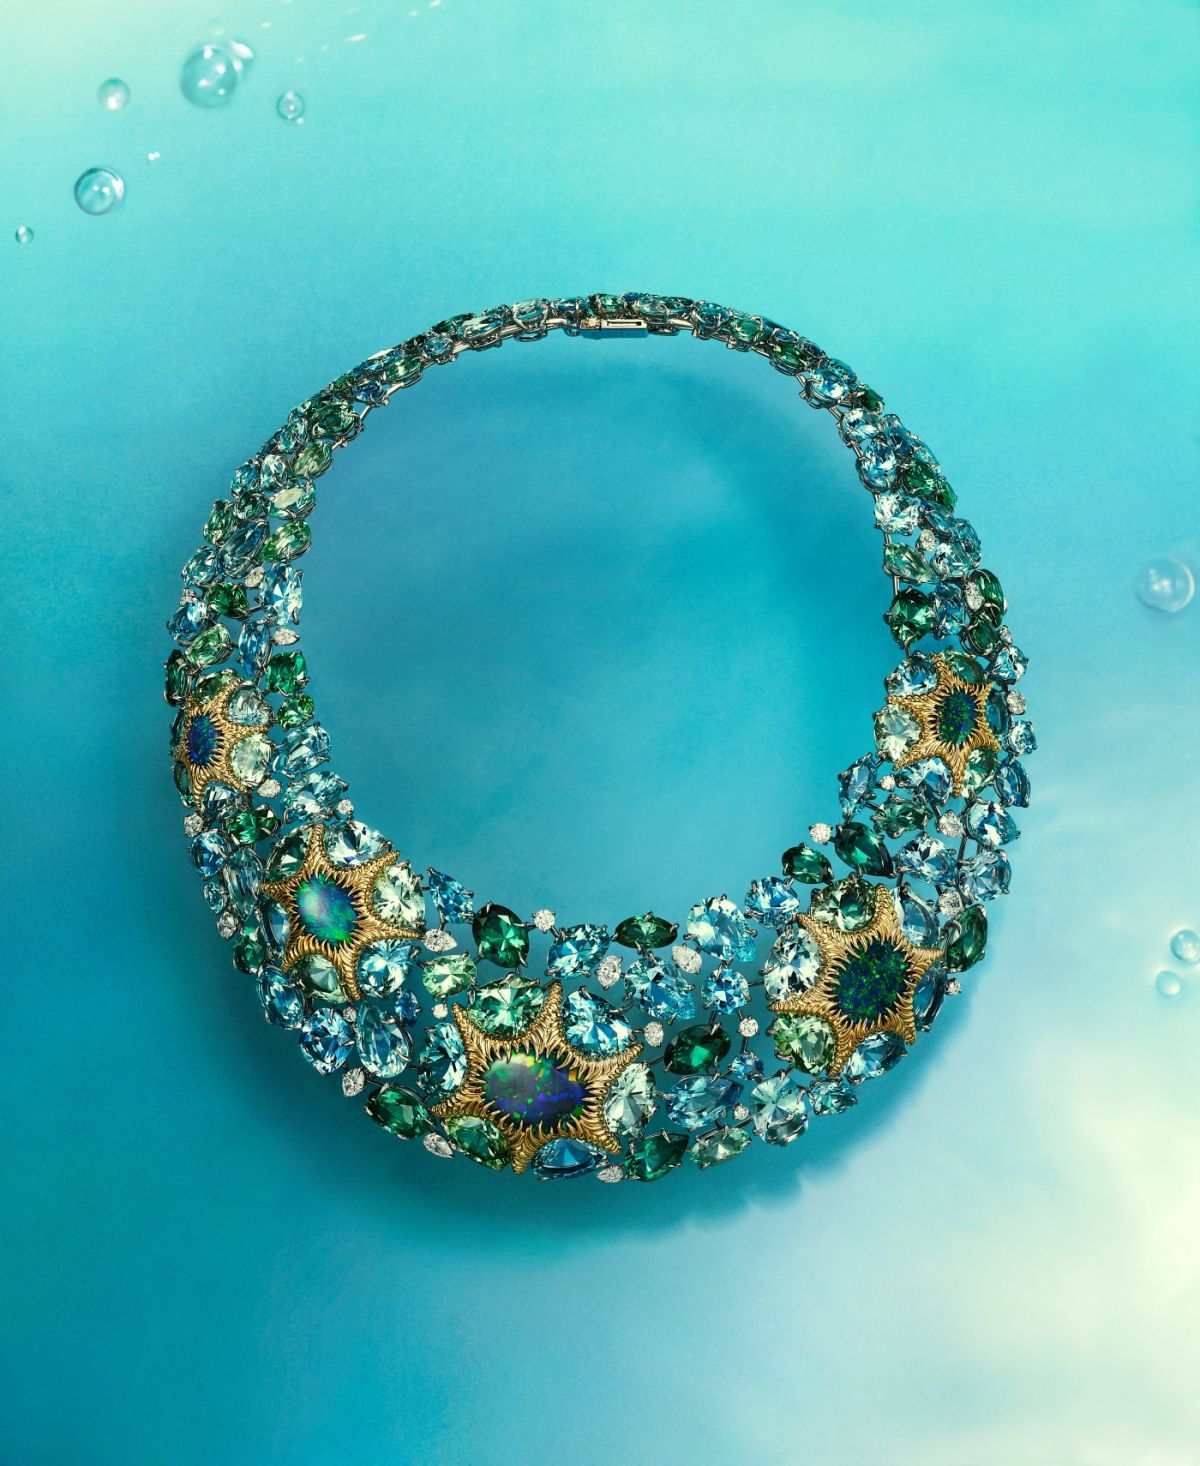 GemDior celebrates twenty years of high jewelry at Christian Dior